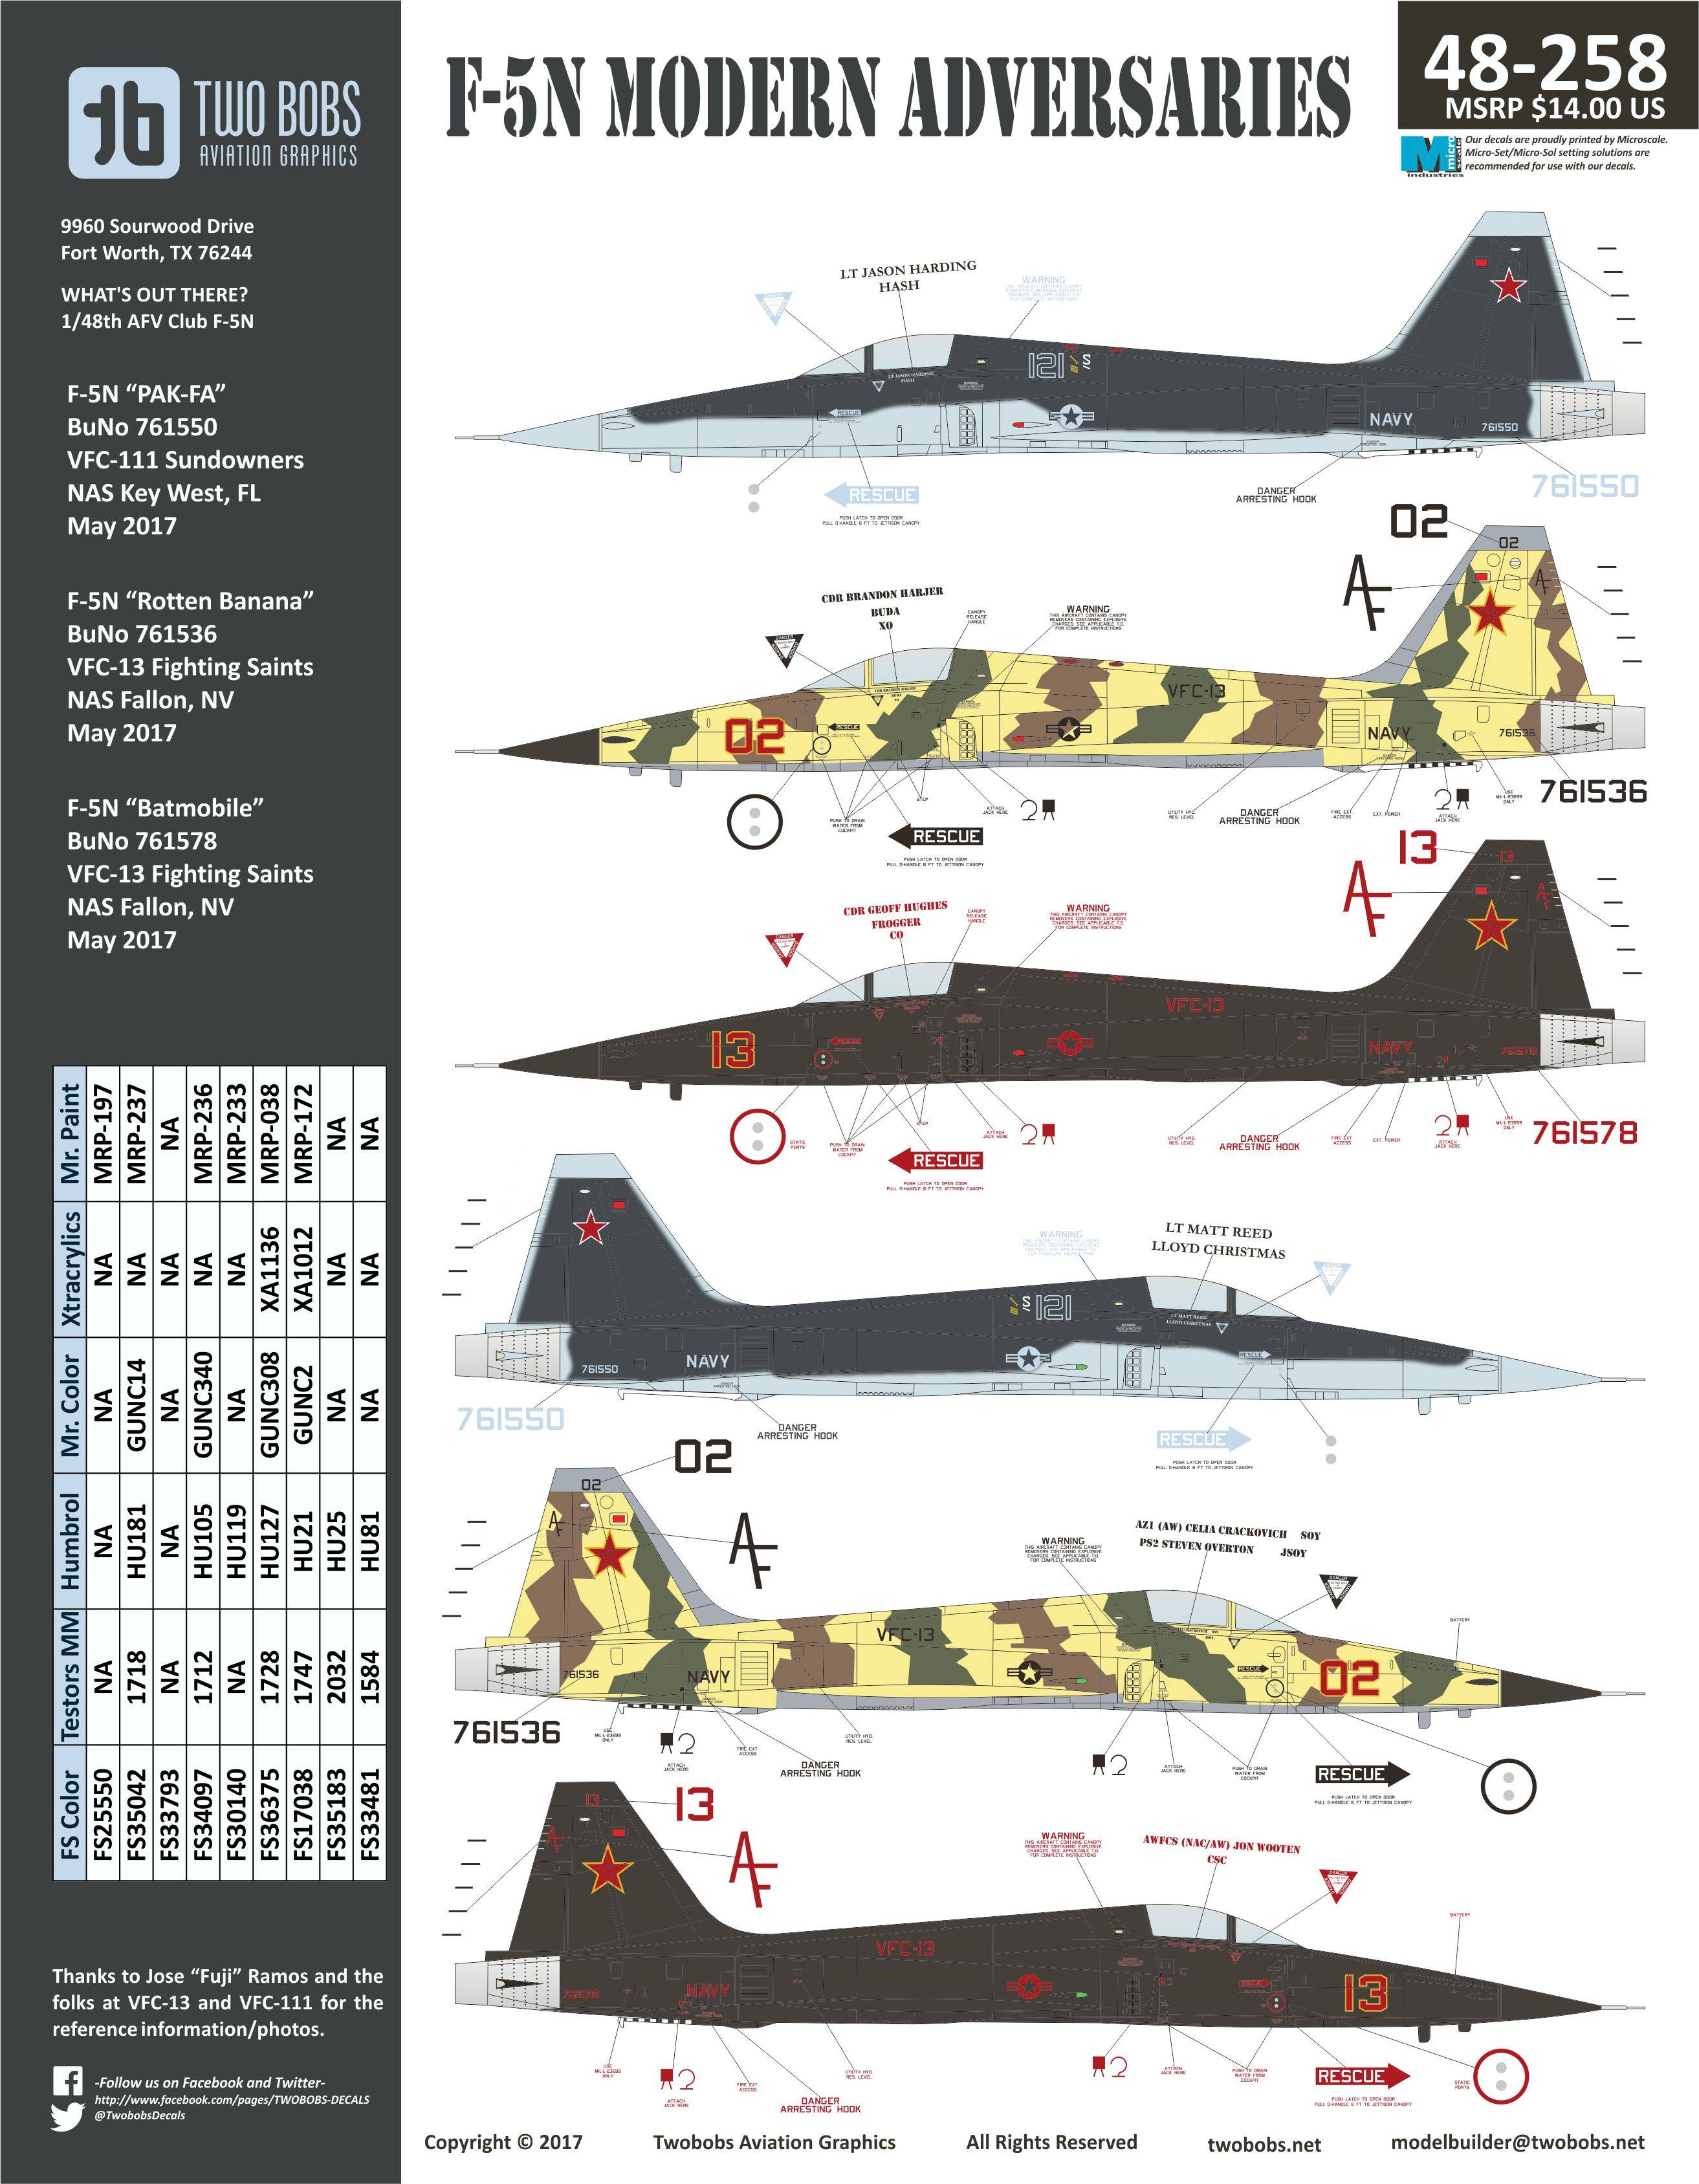 Accessoires - Décal Northrop F-5N modernes Adversaires- 1/48 -Two Bobs